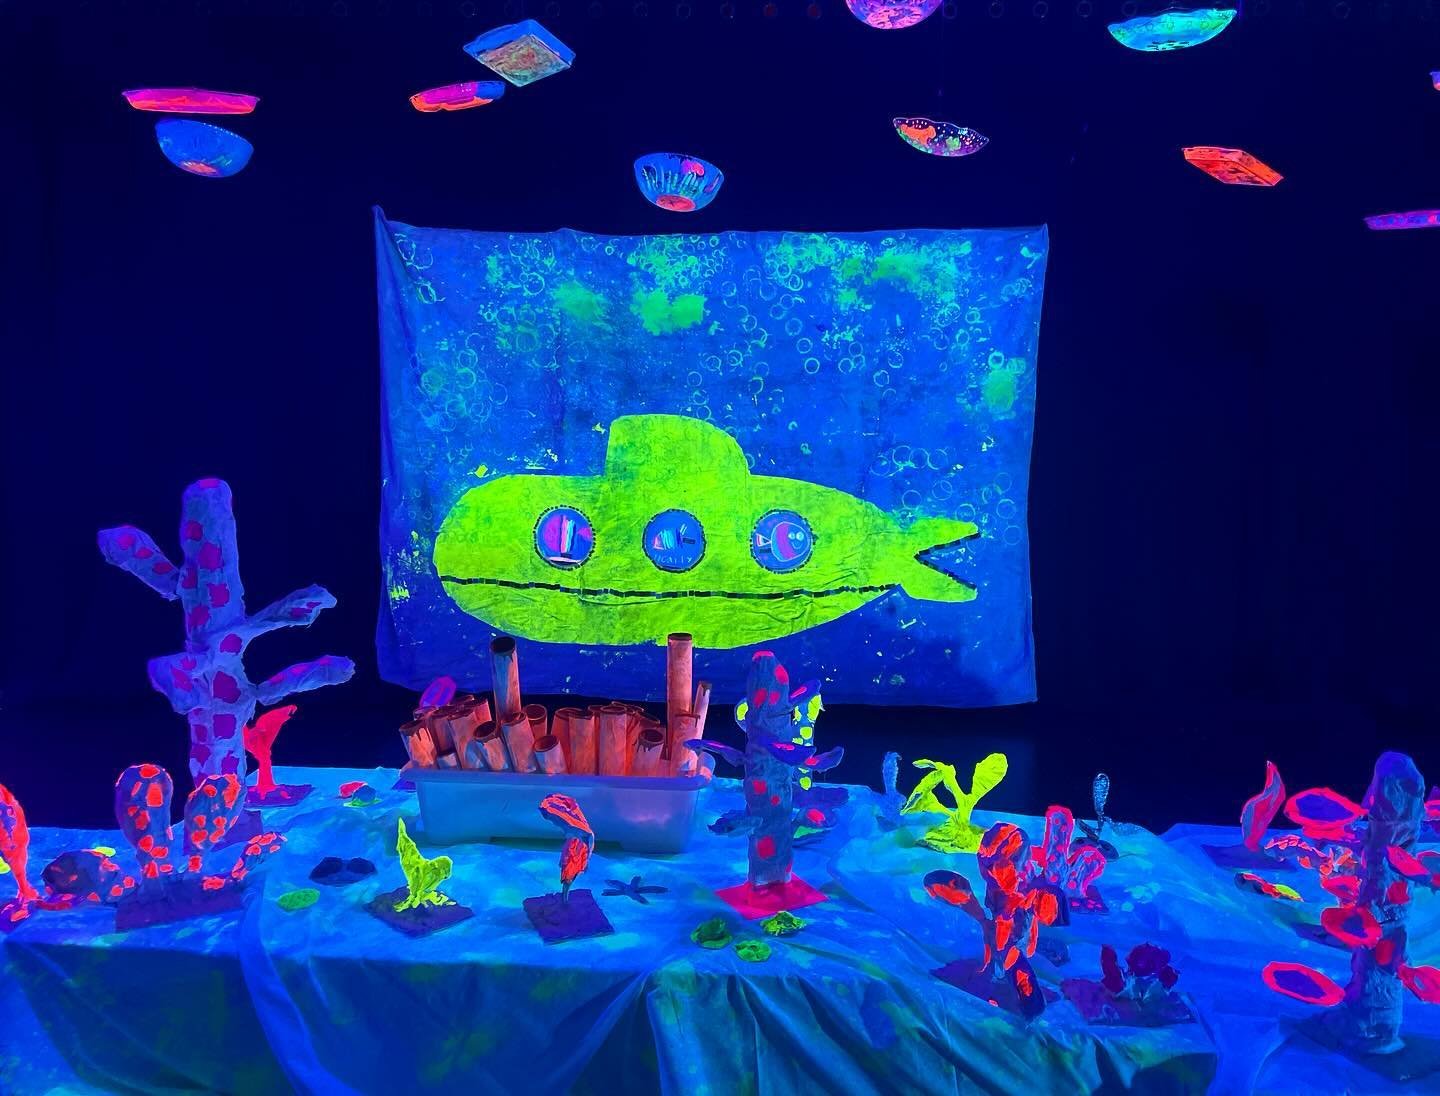 willow&rsquo;s underwater 🐟 🪼 🦈
.
.
.
.
#art #preschool #preschoolart #preschoolopenhouse #openhouse #kidsart #artexhibition #orangecounty #underwater #fish #seaanimals #coralreef #submarine #prek